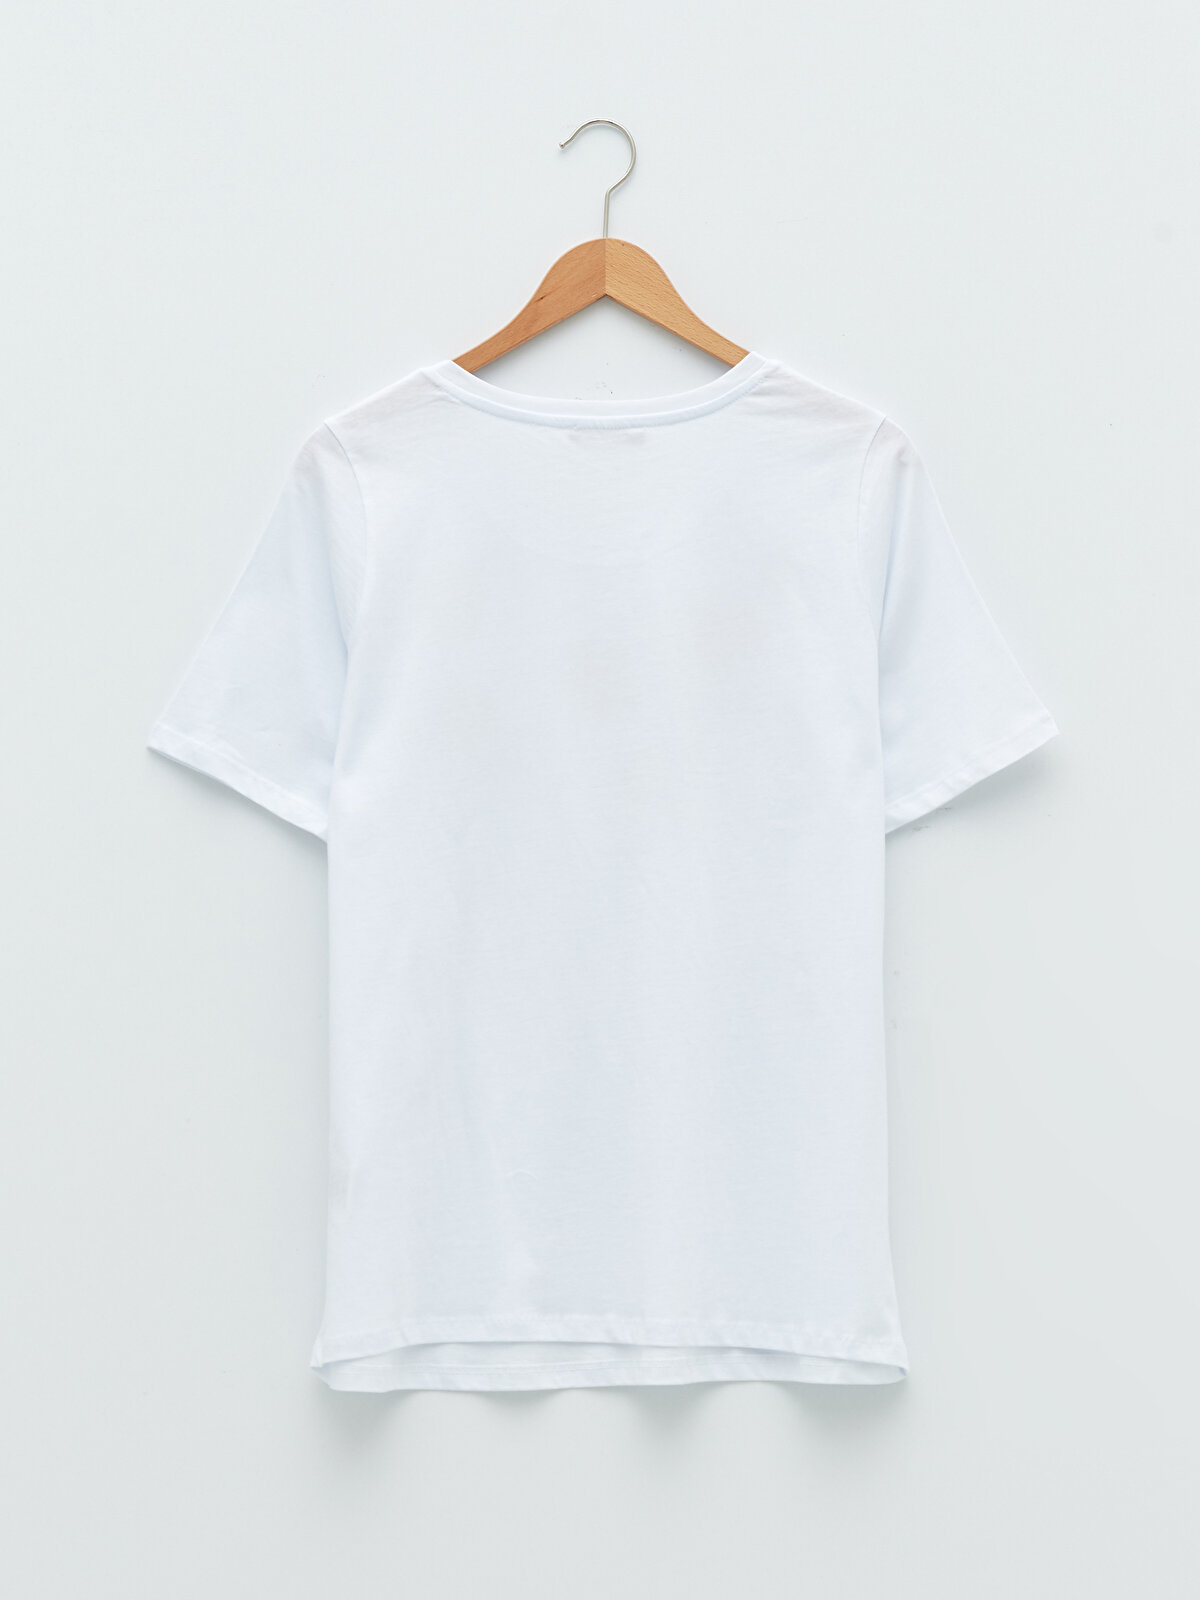 Crew Neck Floral Short Sleeve Cotton T-Shirt -W1I638Z8-J5E 